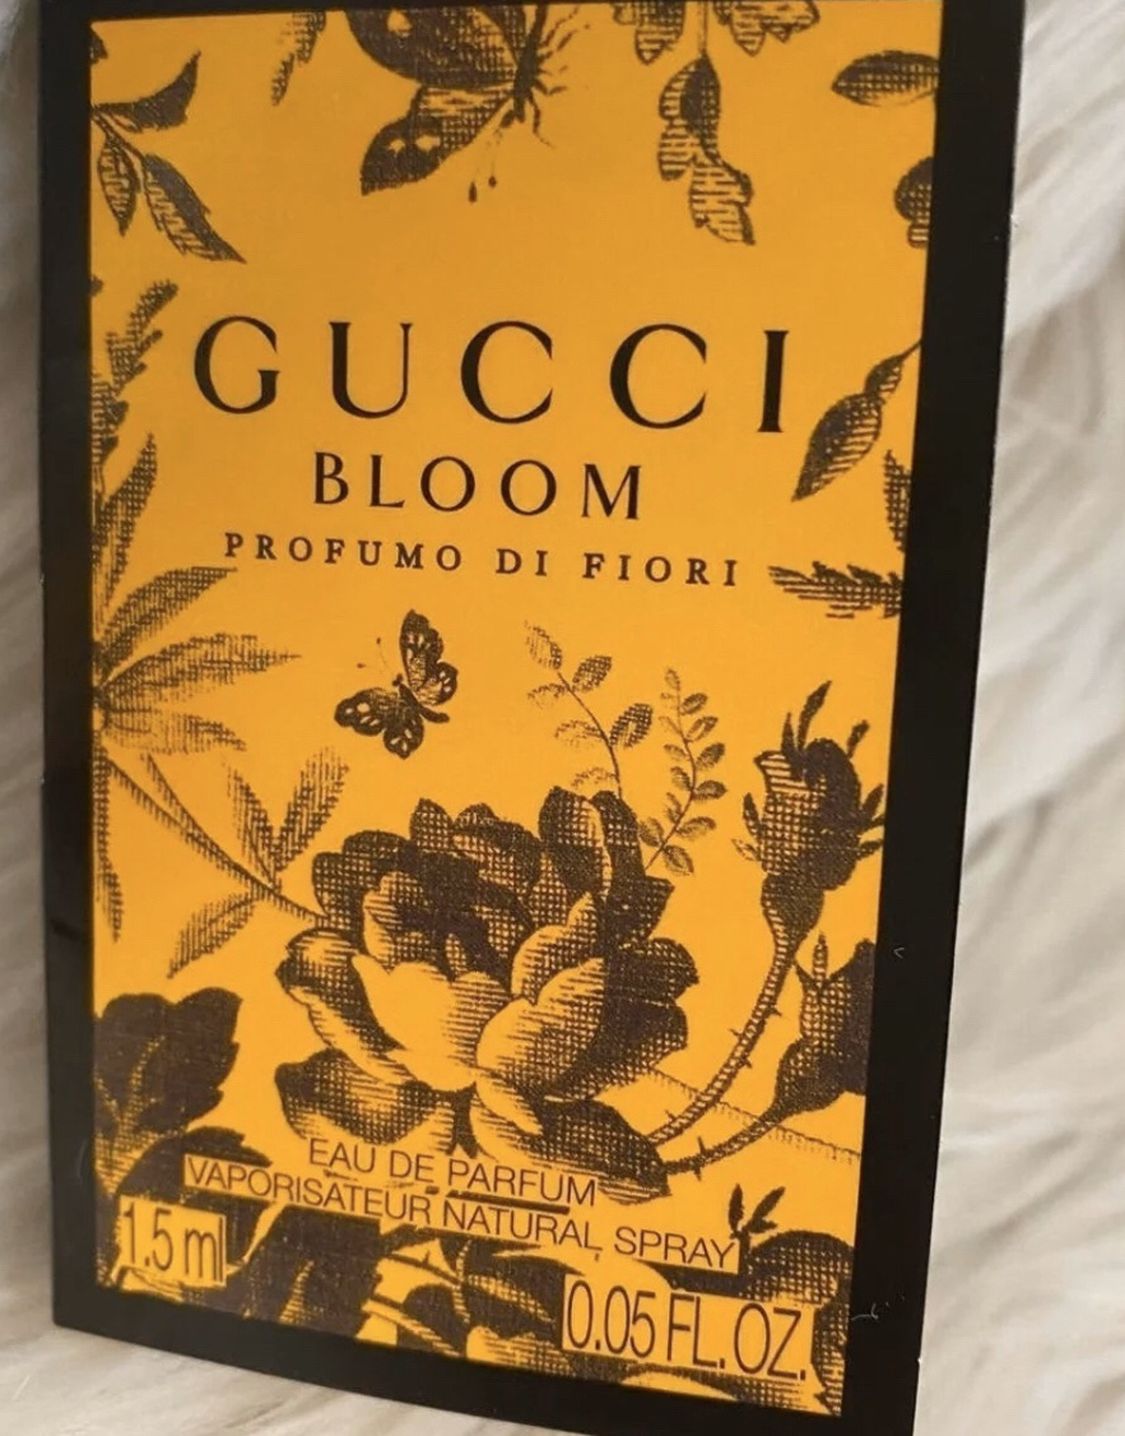 Gucci Bloom Fiori Perfume sample